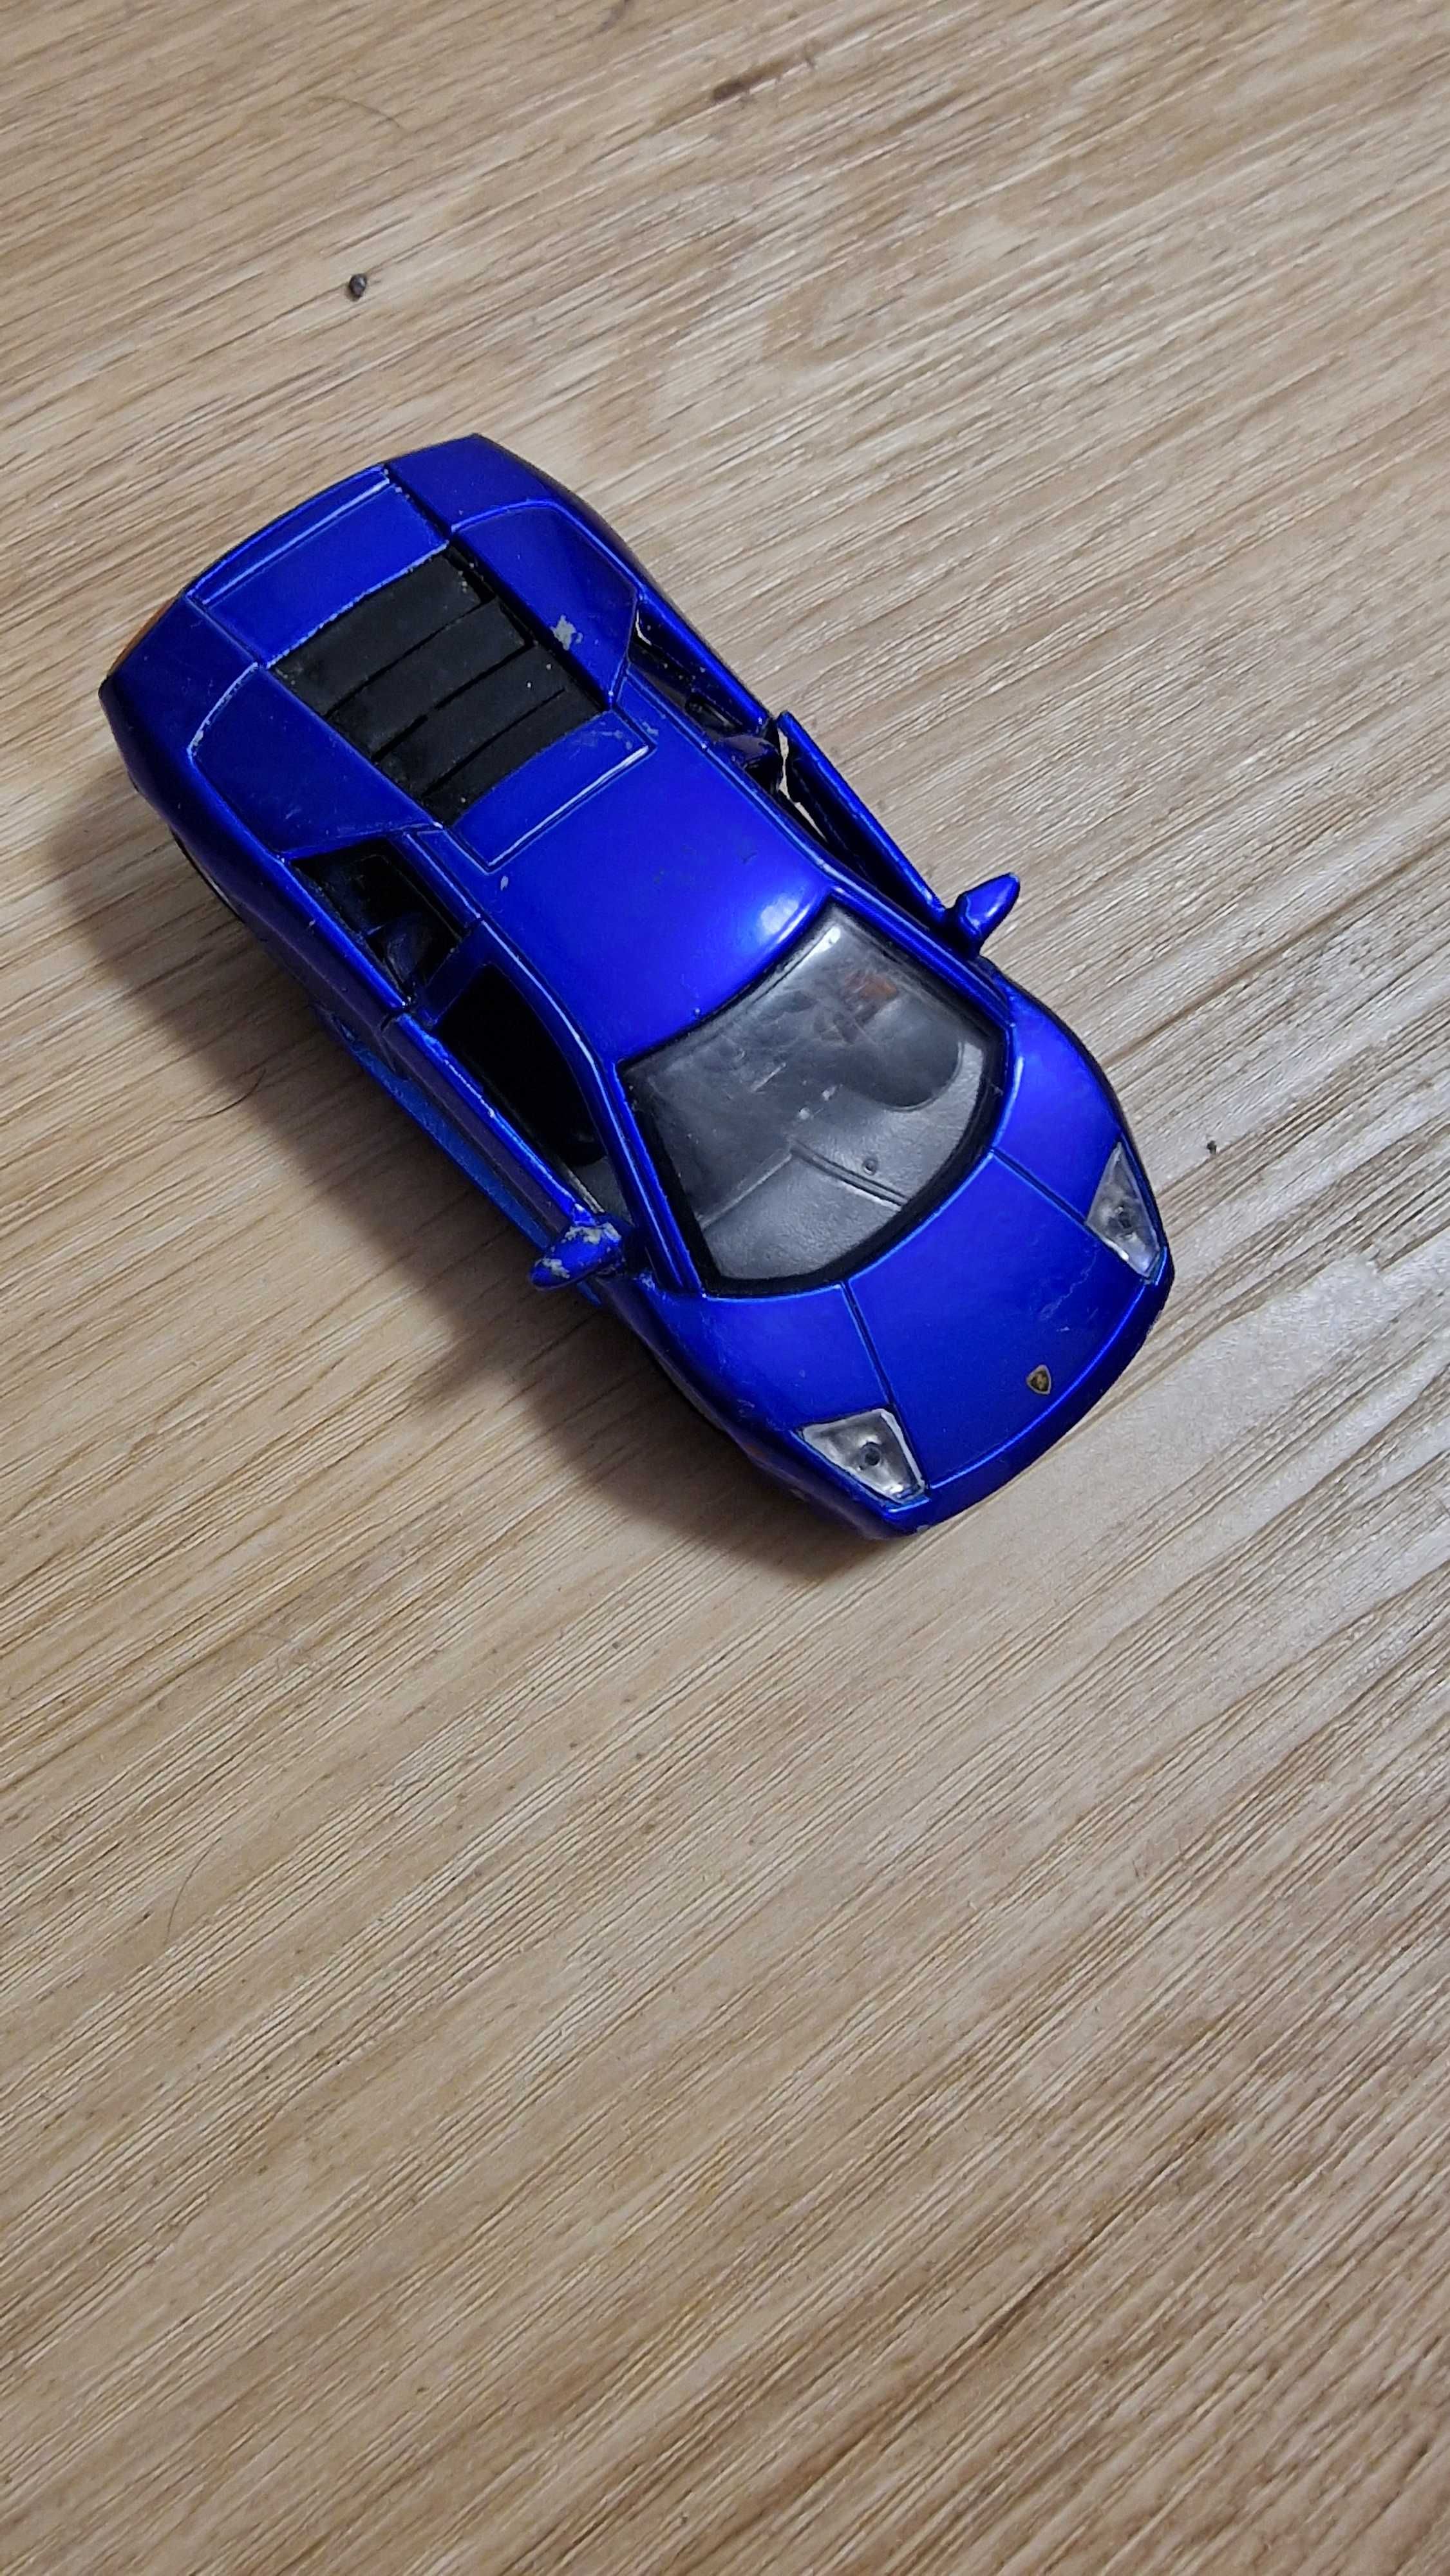 Lamborghini samochod zabawka